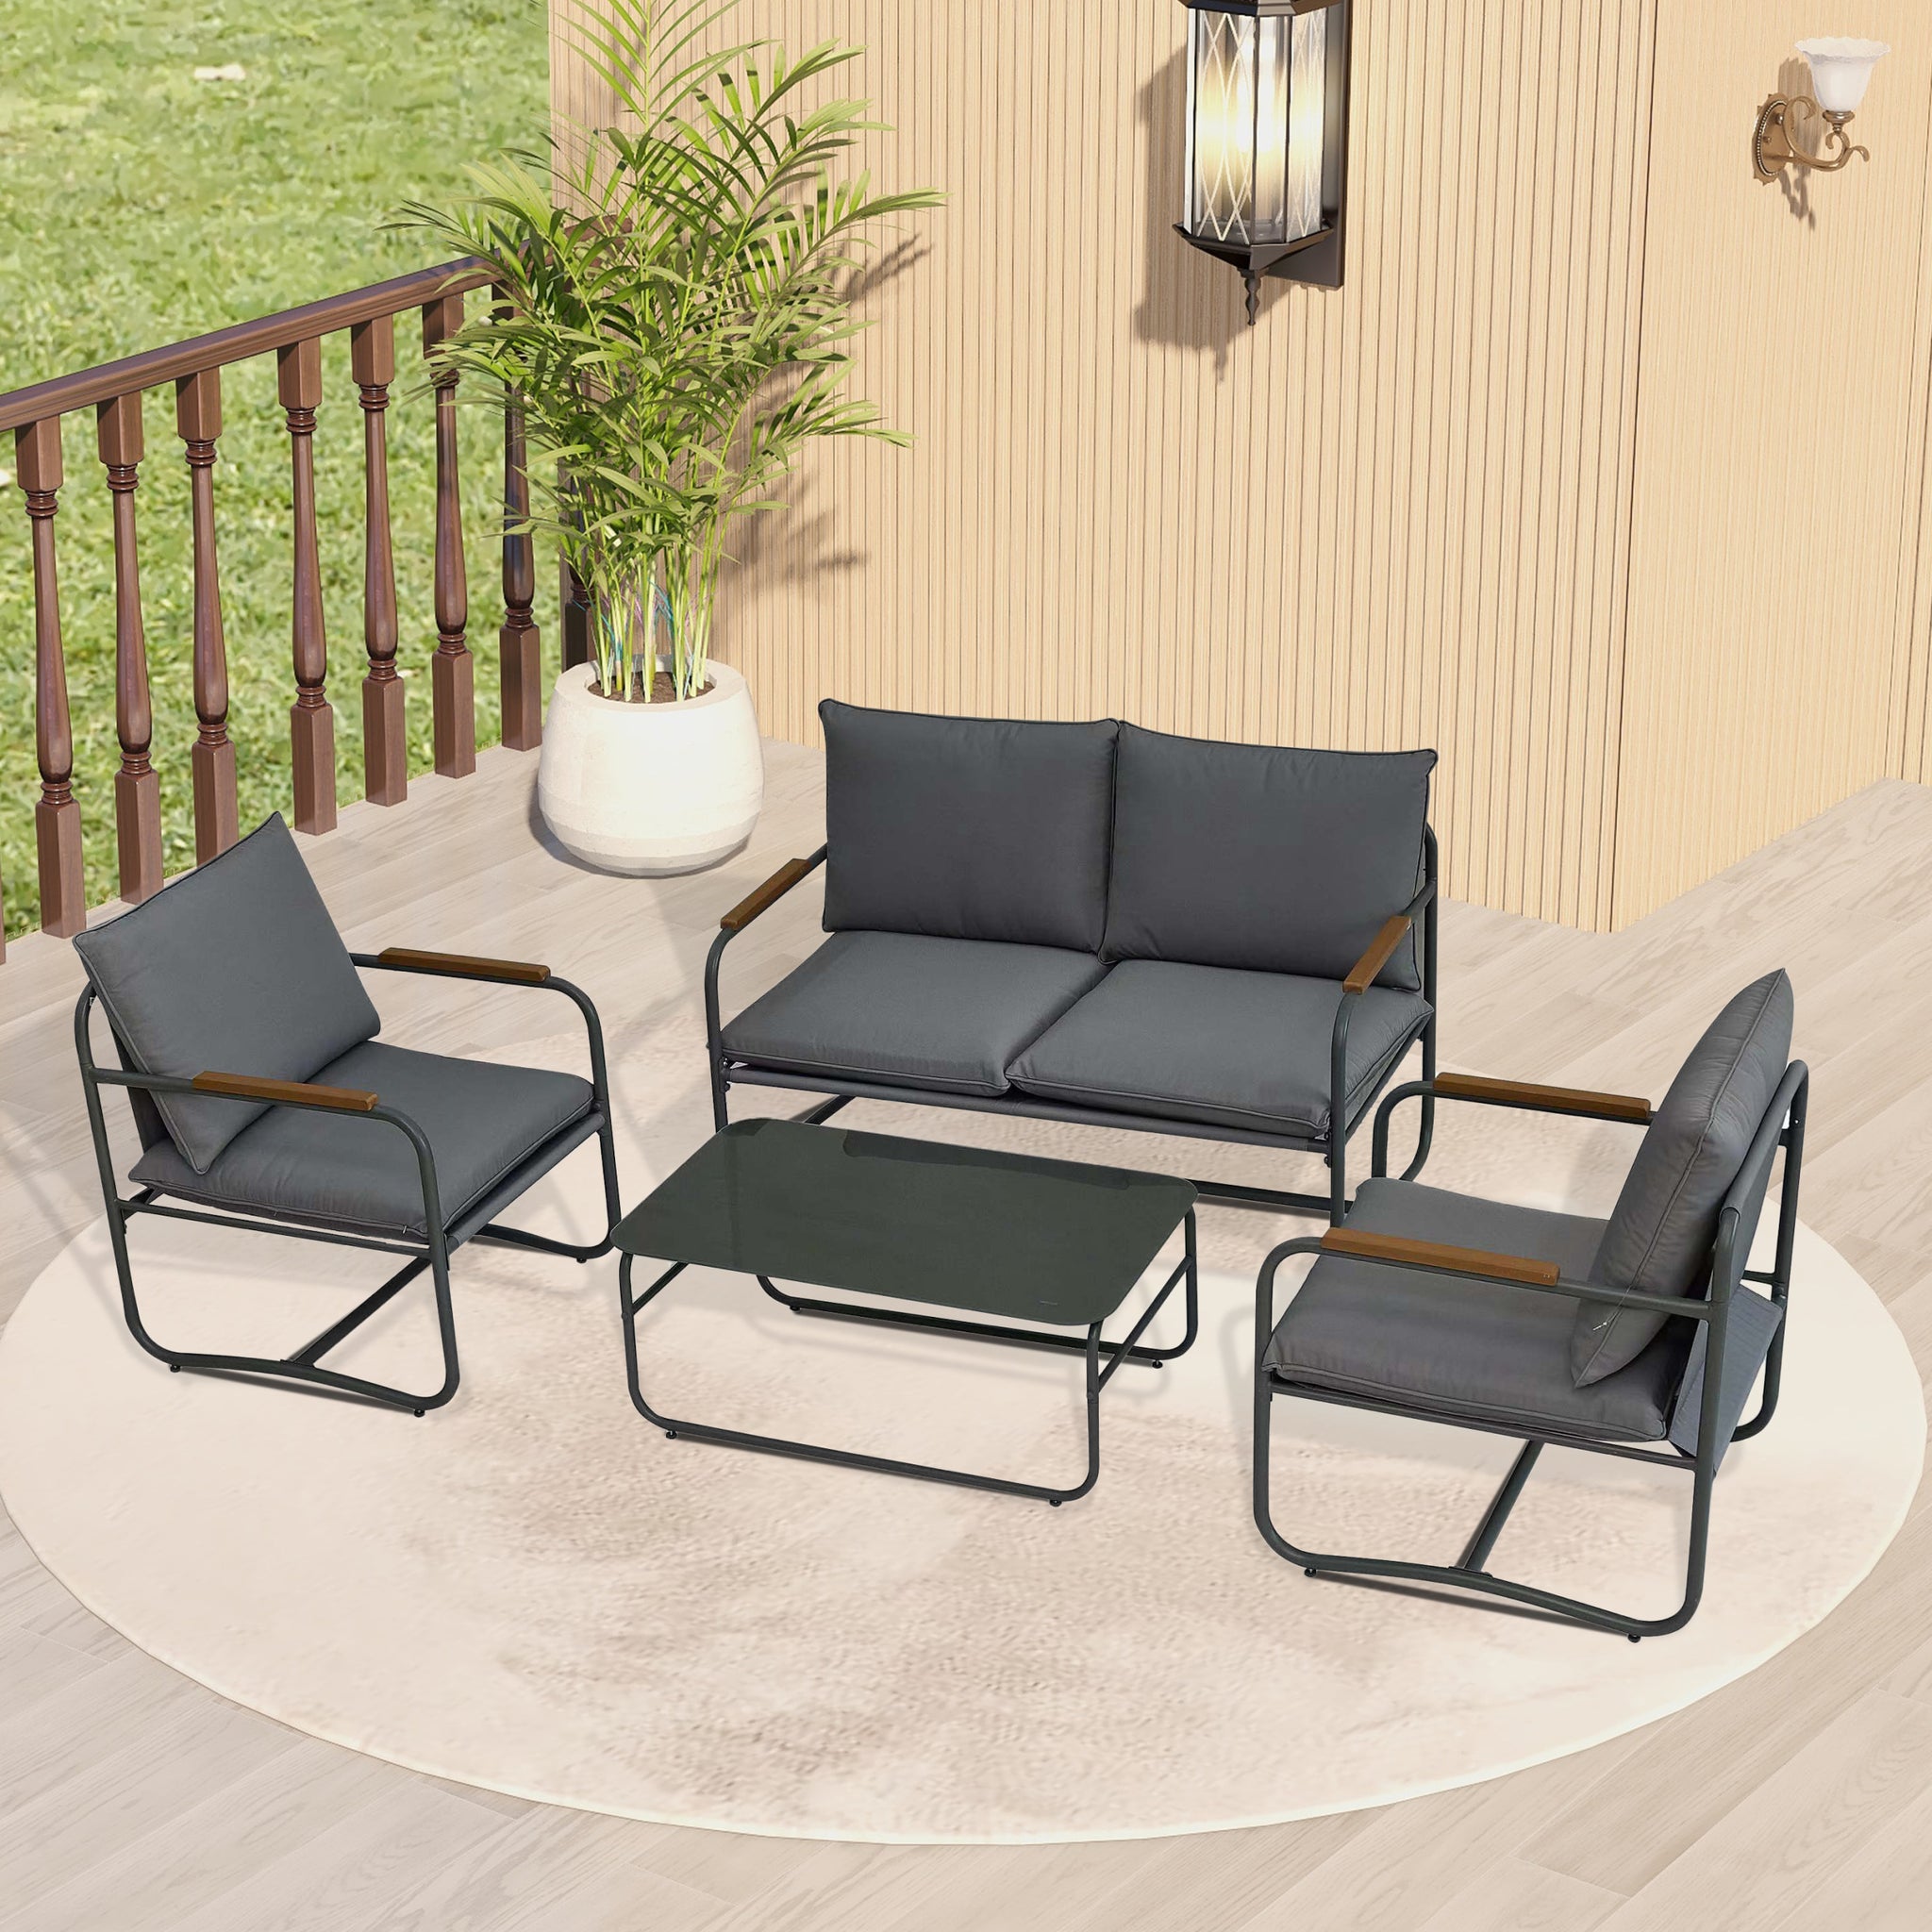 4 Piece Outdoor Patio Furniture Sets, Patio gray-aluminum